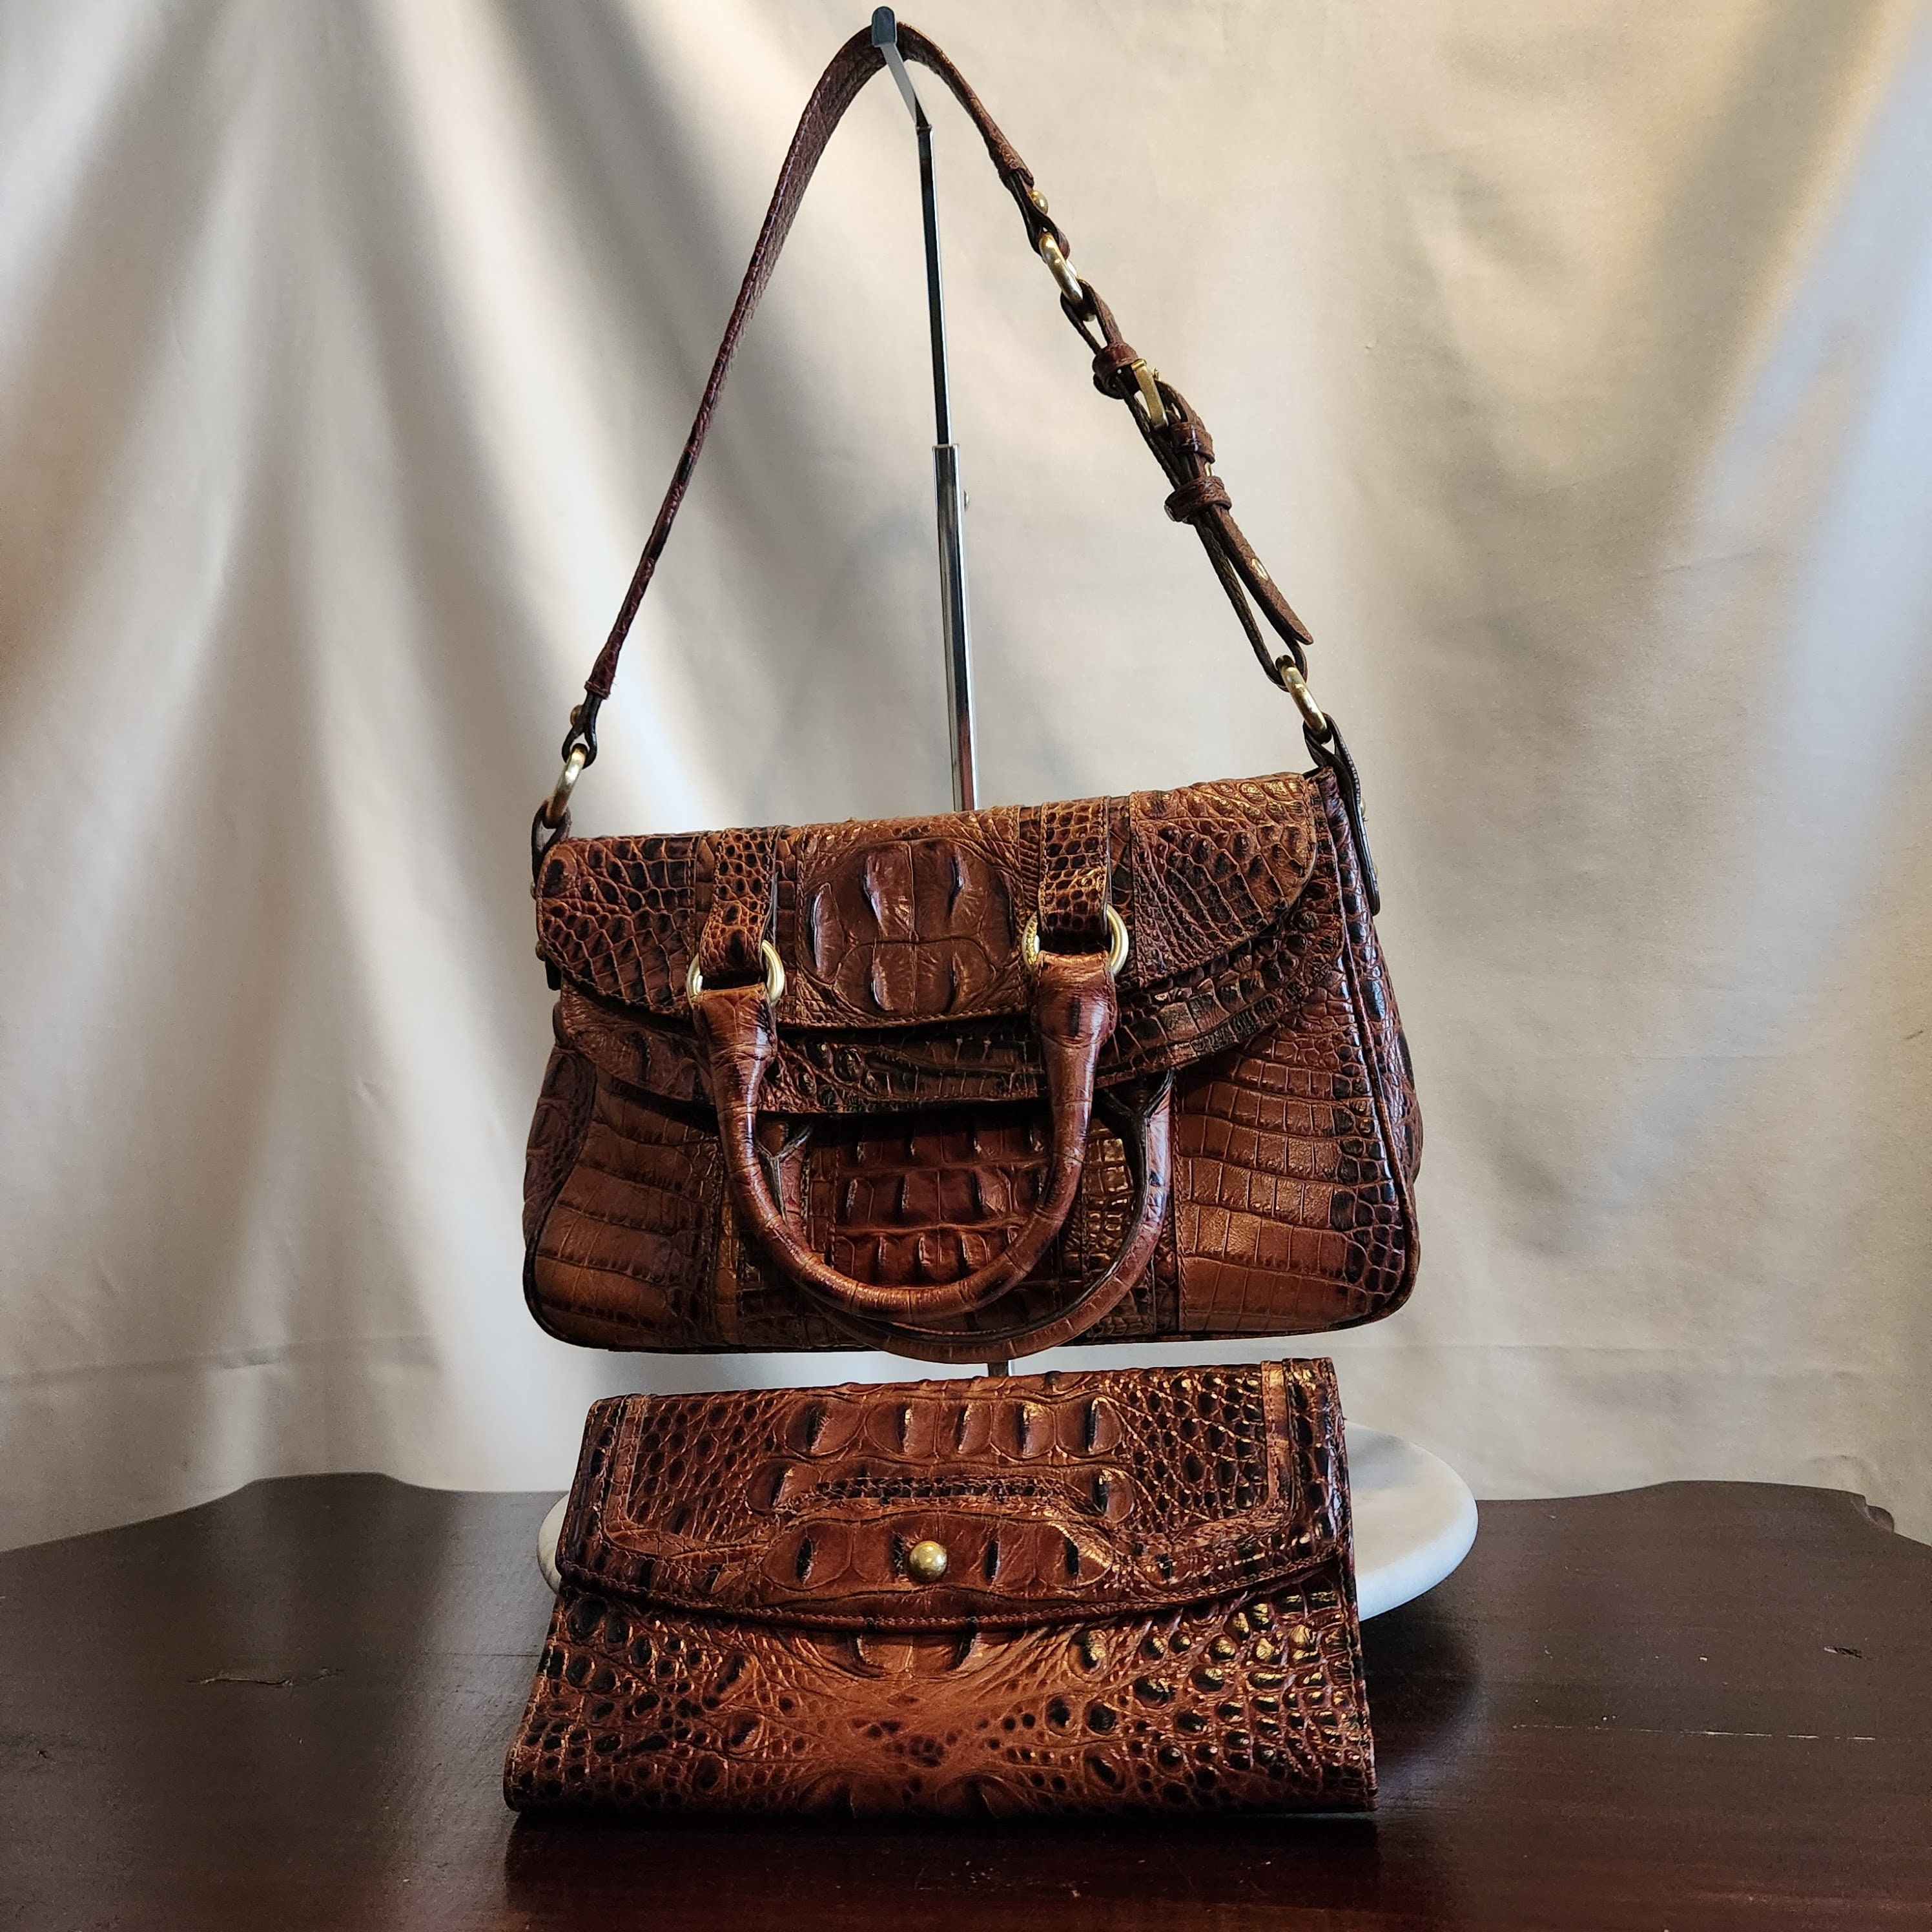 RARE! Vintage Brahmin Leather Handbag Purse - Brown / Black | eBay